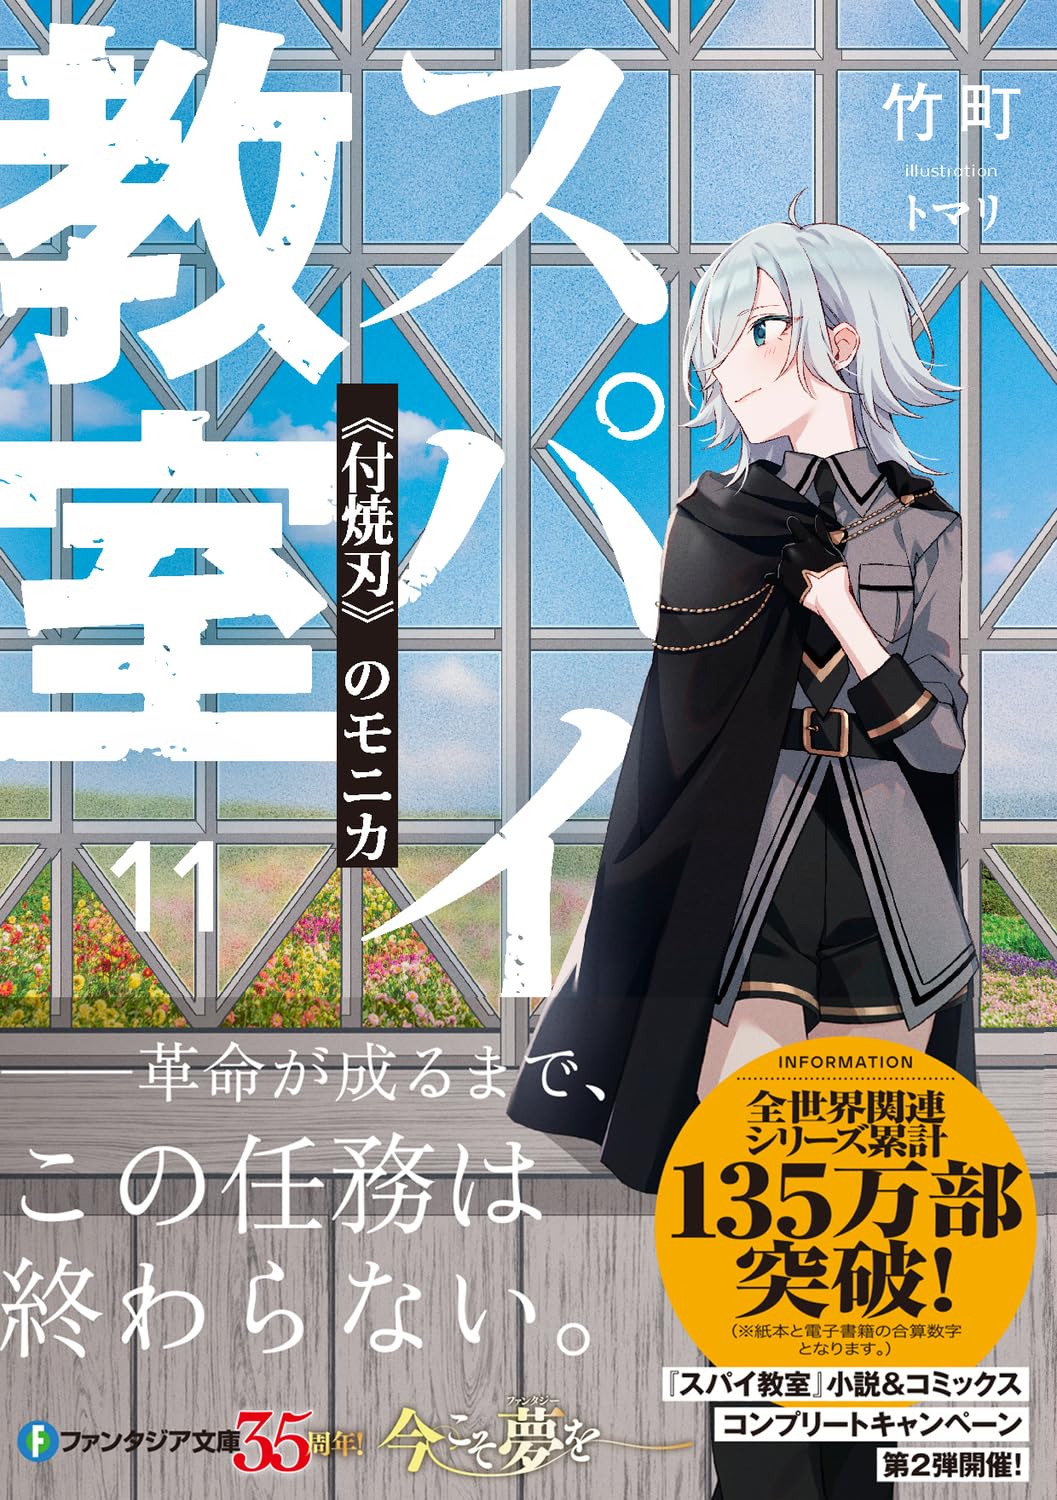 Spy Classroom (light novel) Volume 2 (Spy Kyoushitsu) - Manga Store 